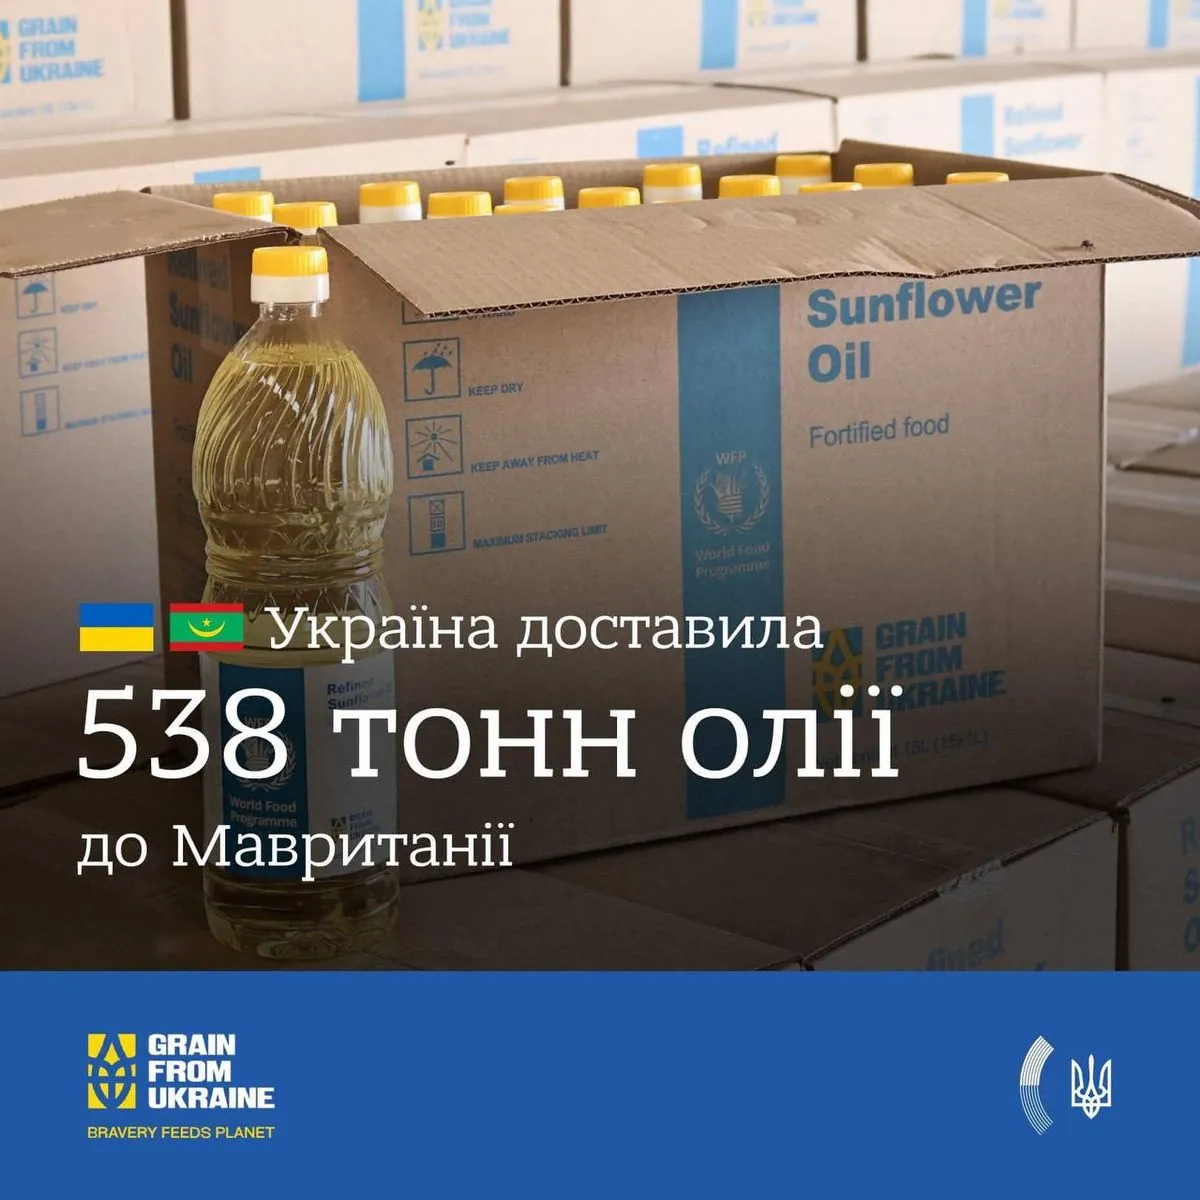 Grain from Ukraine: Украина поставила 538 тонн масла в Мавританию